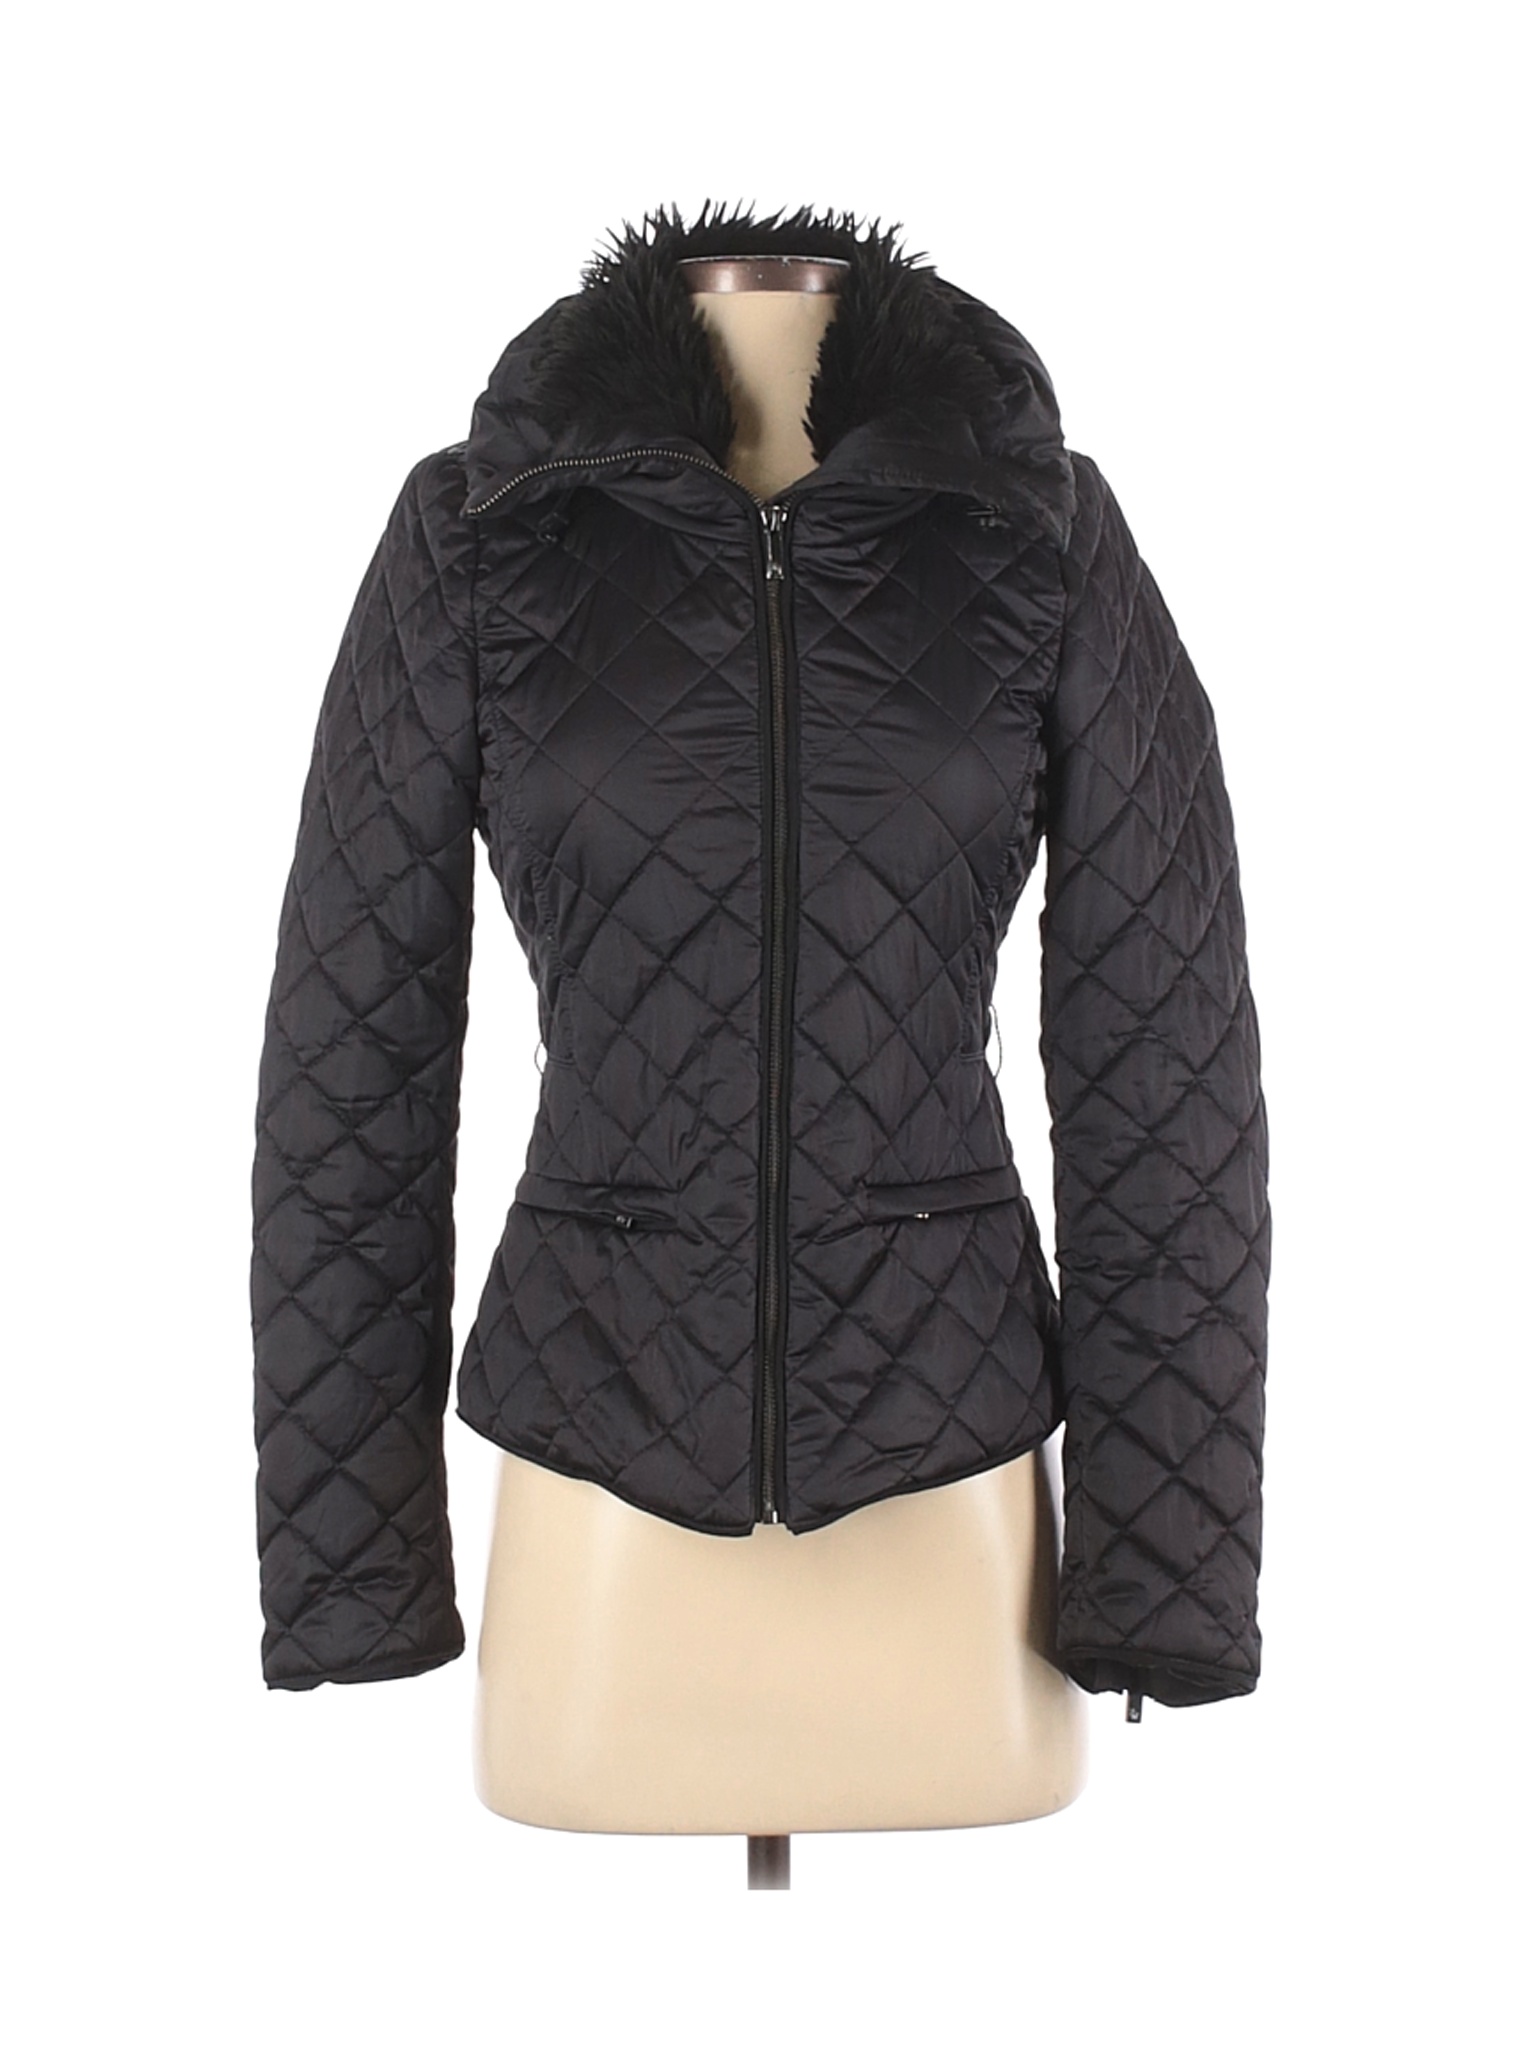 Zara Women Black Jacket XS | eBay